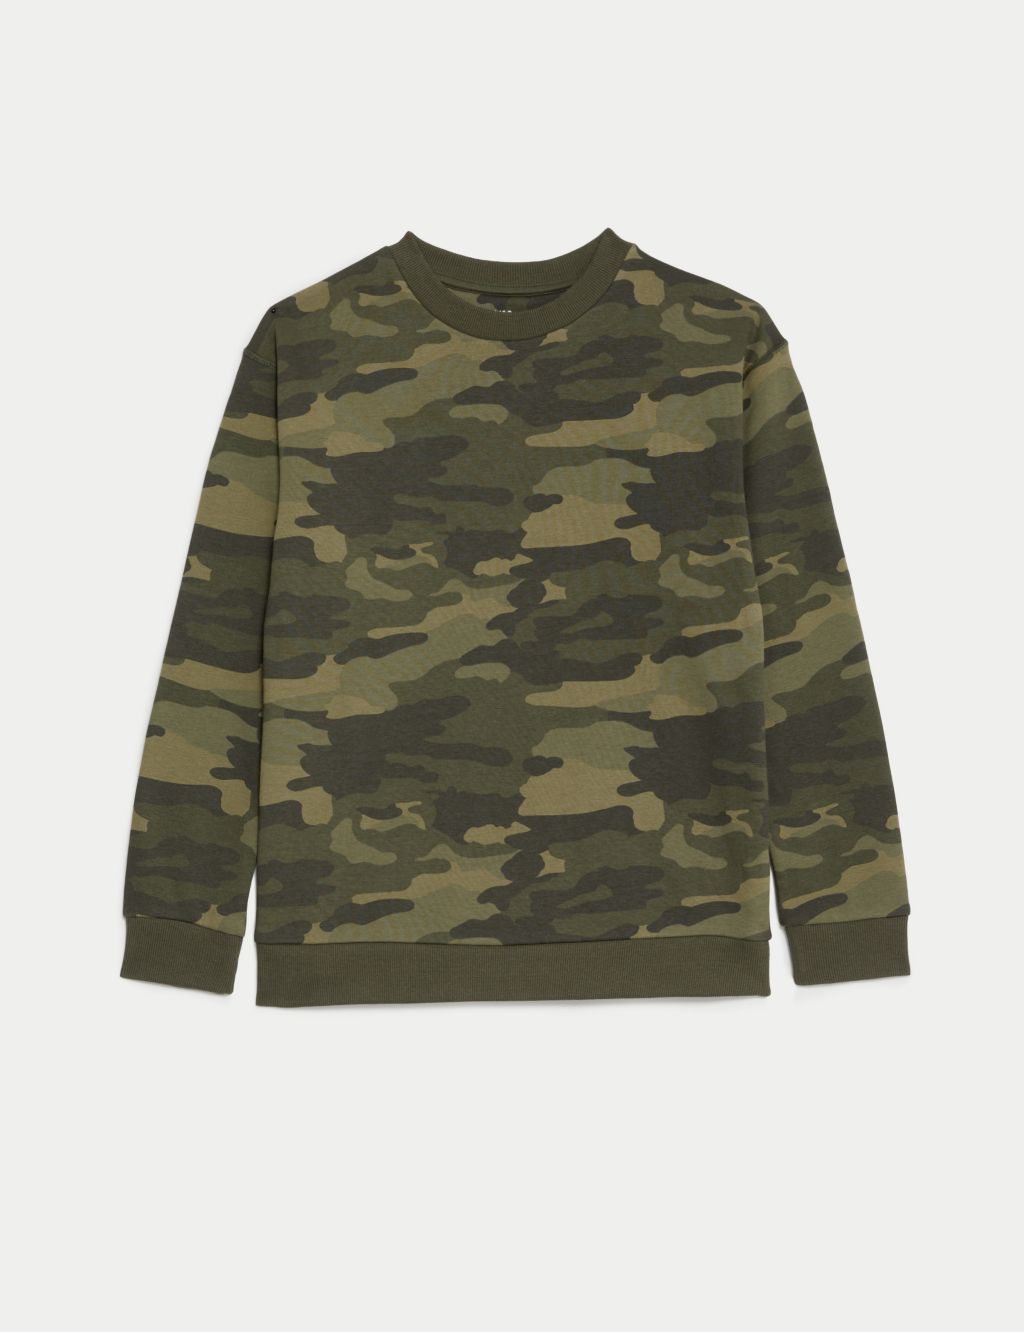 Cotton Rich Camouflage Sweatshirt (6-16 Yrs) image 2